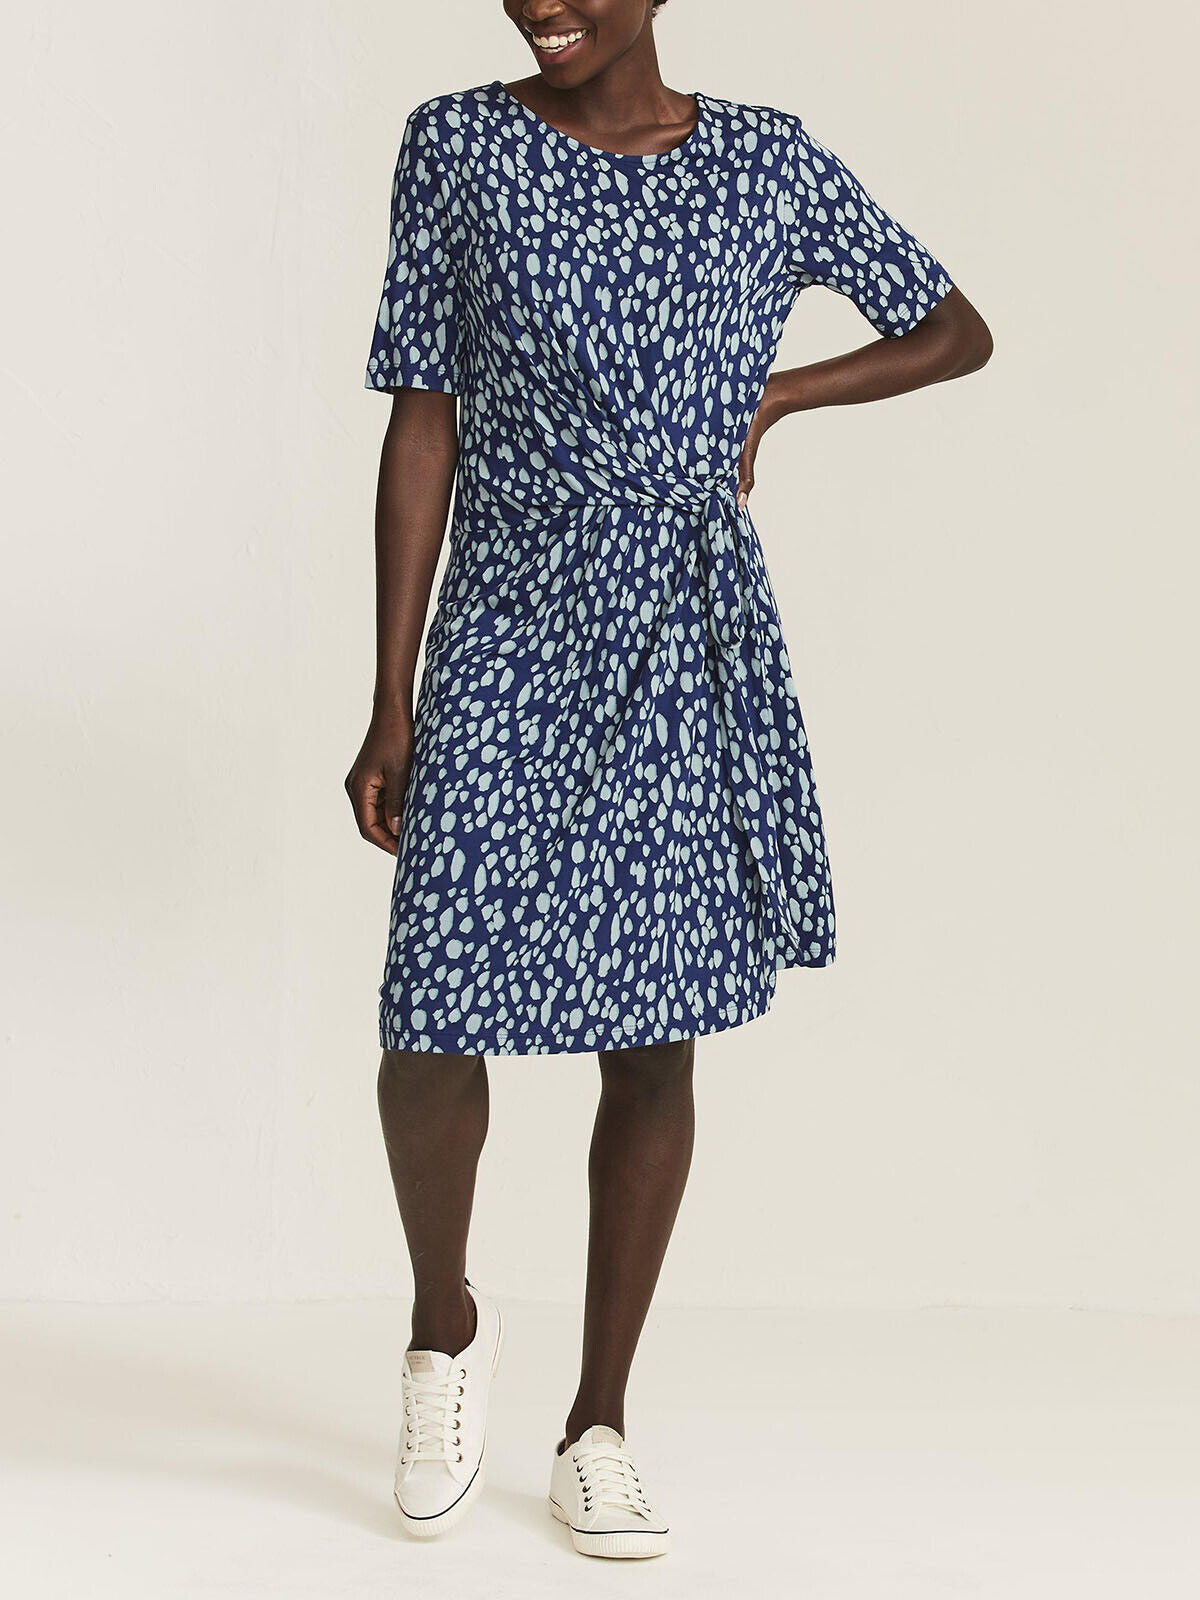 EX Fat Face Indigo Rose Dappled Mark Make Dress Sizes 6, 10, 14, 18 RRP £59